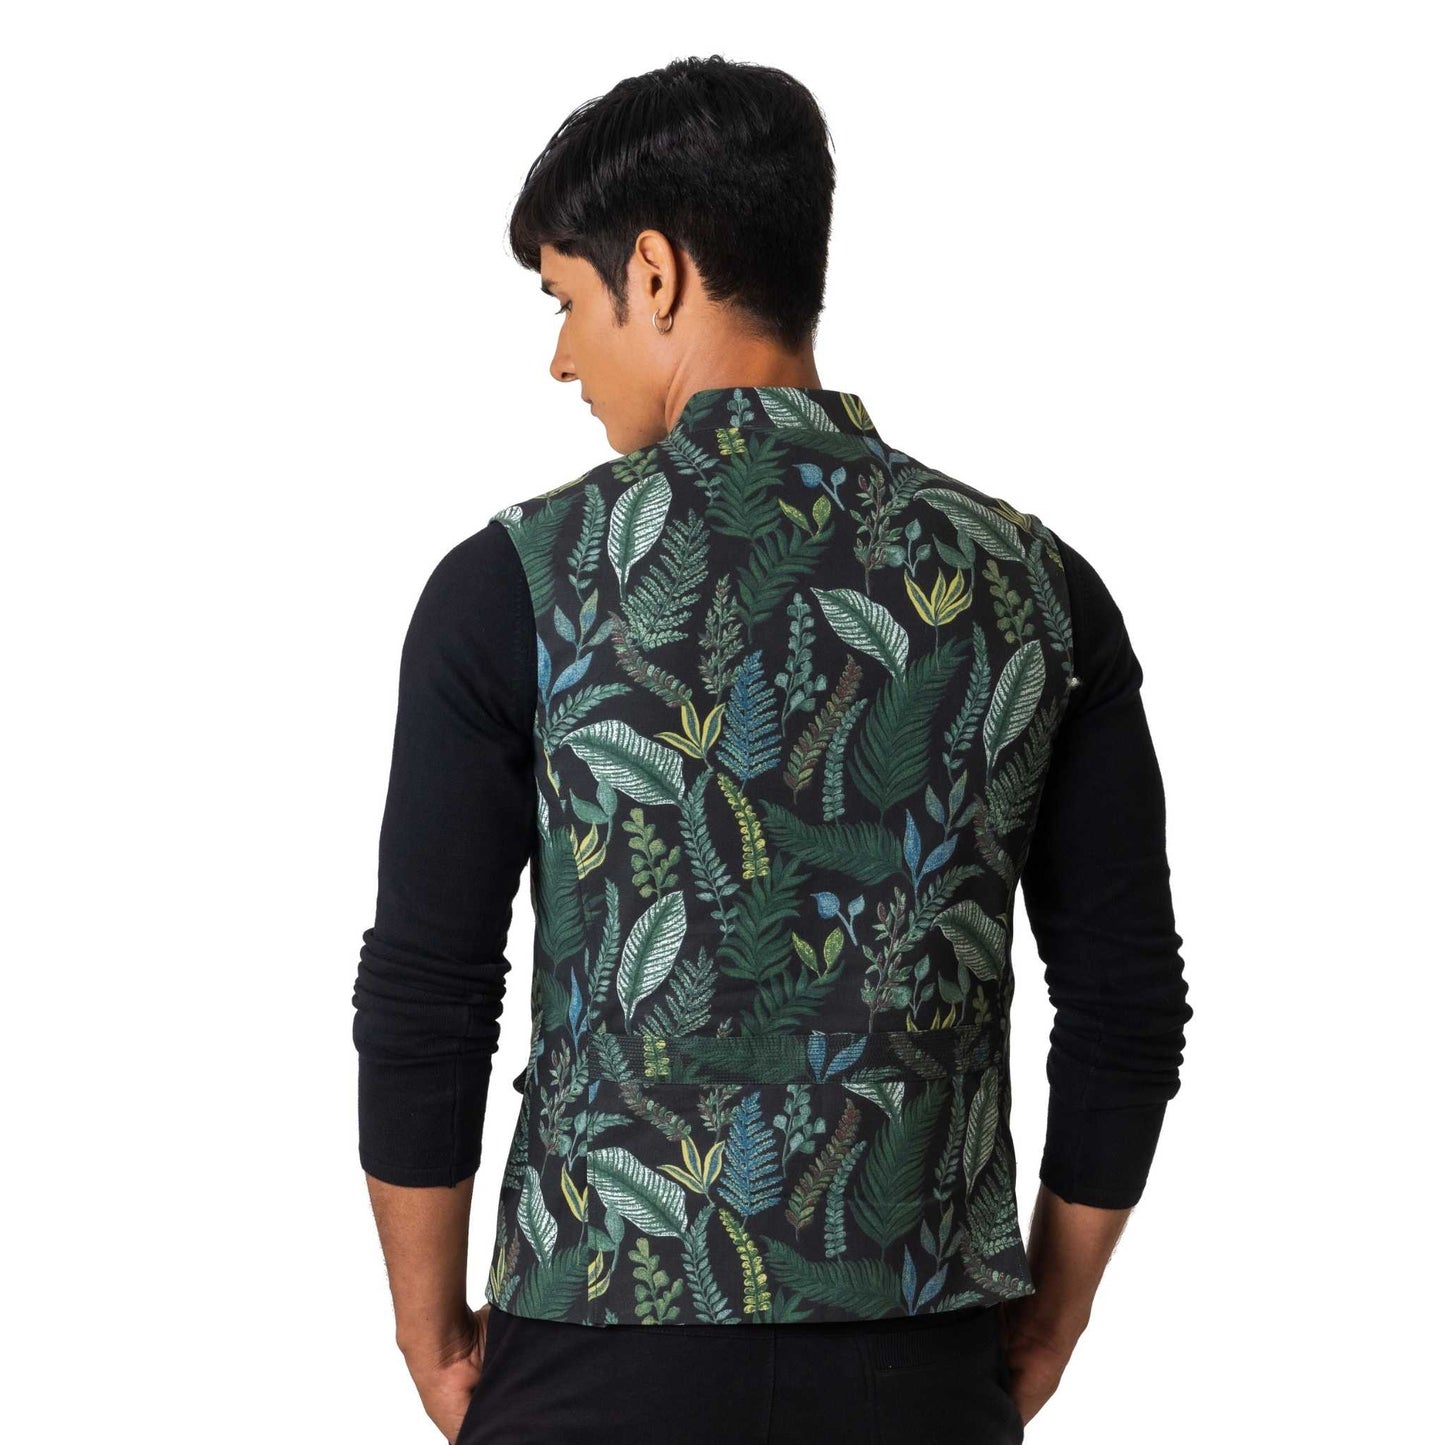 Sleeveless bandi in jungle printed cotton with metallic zipper